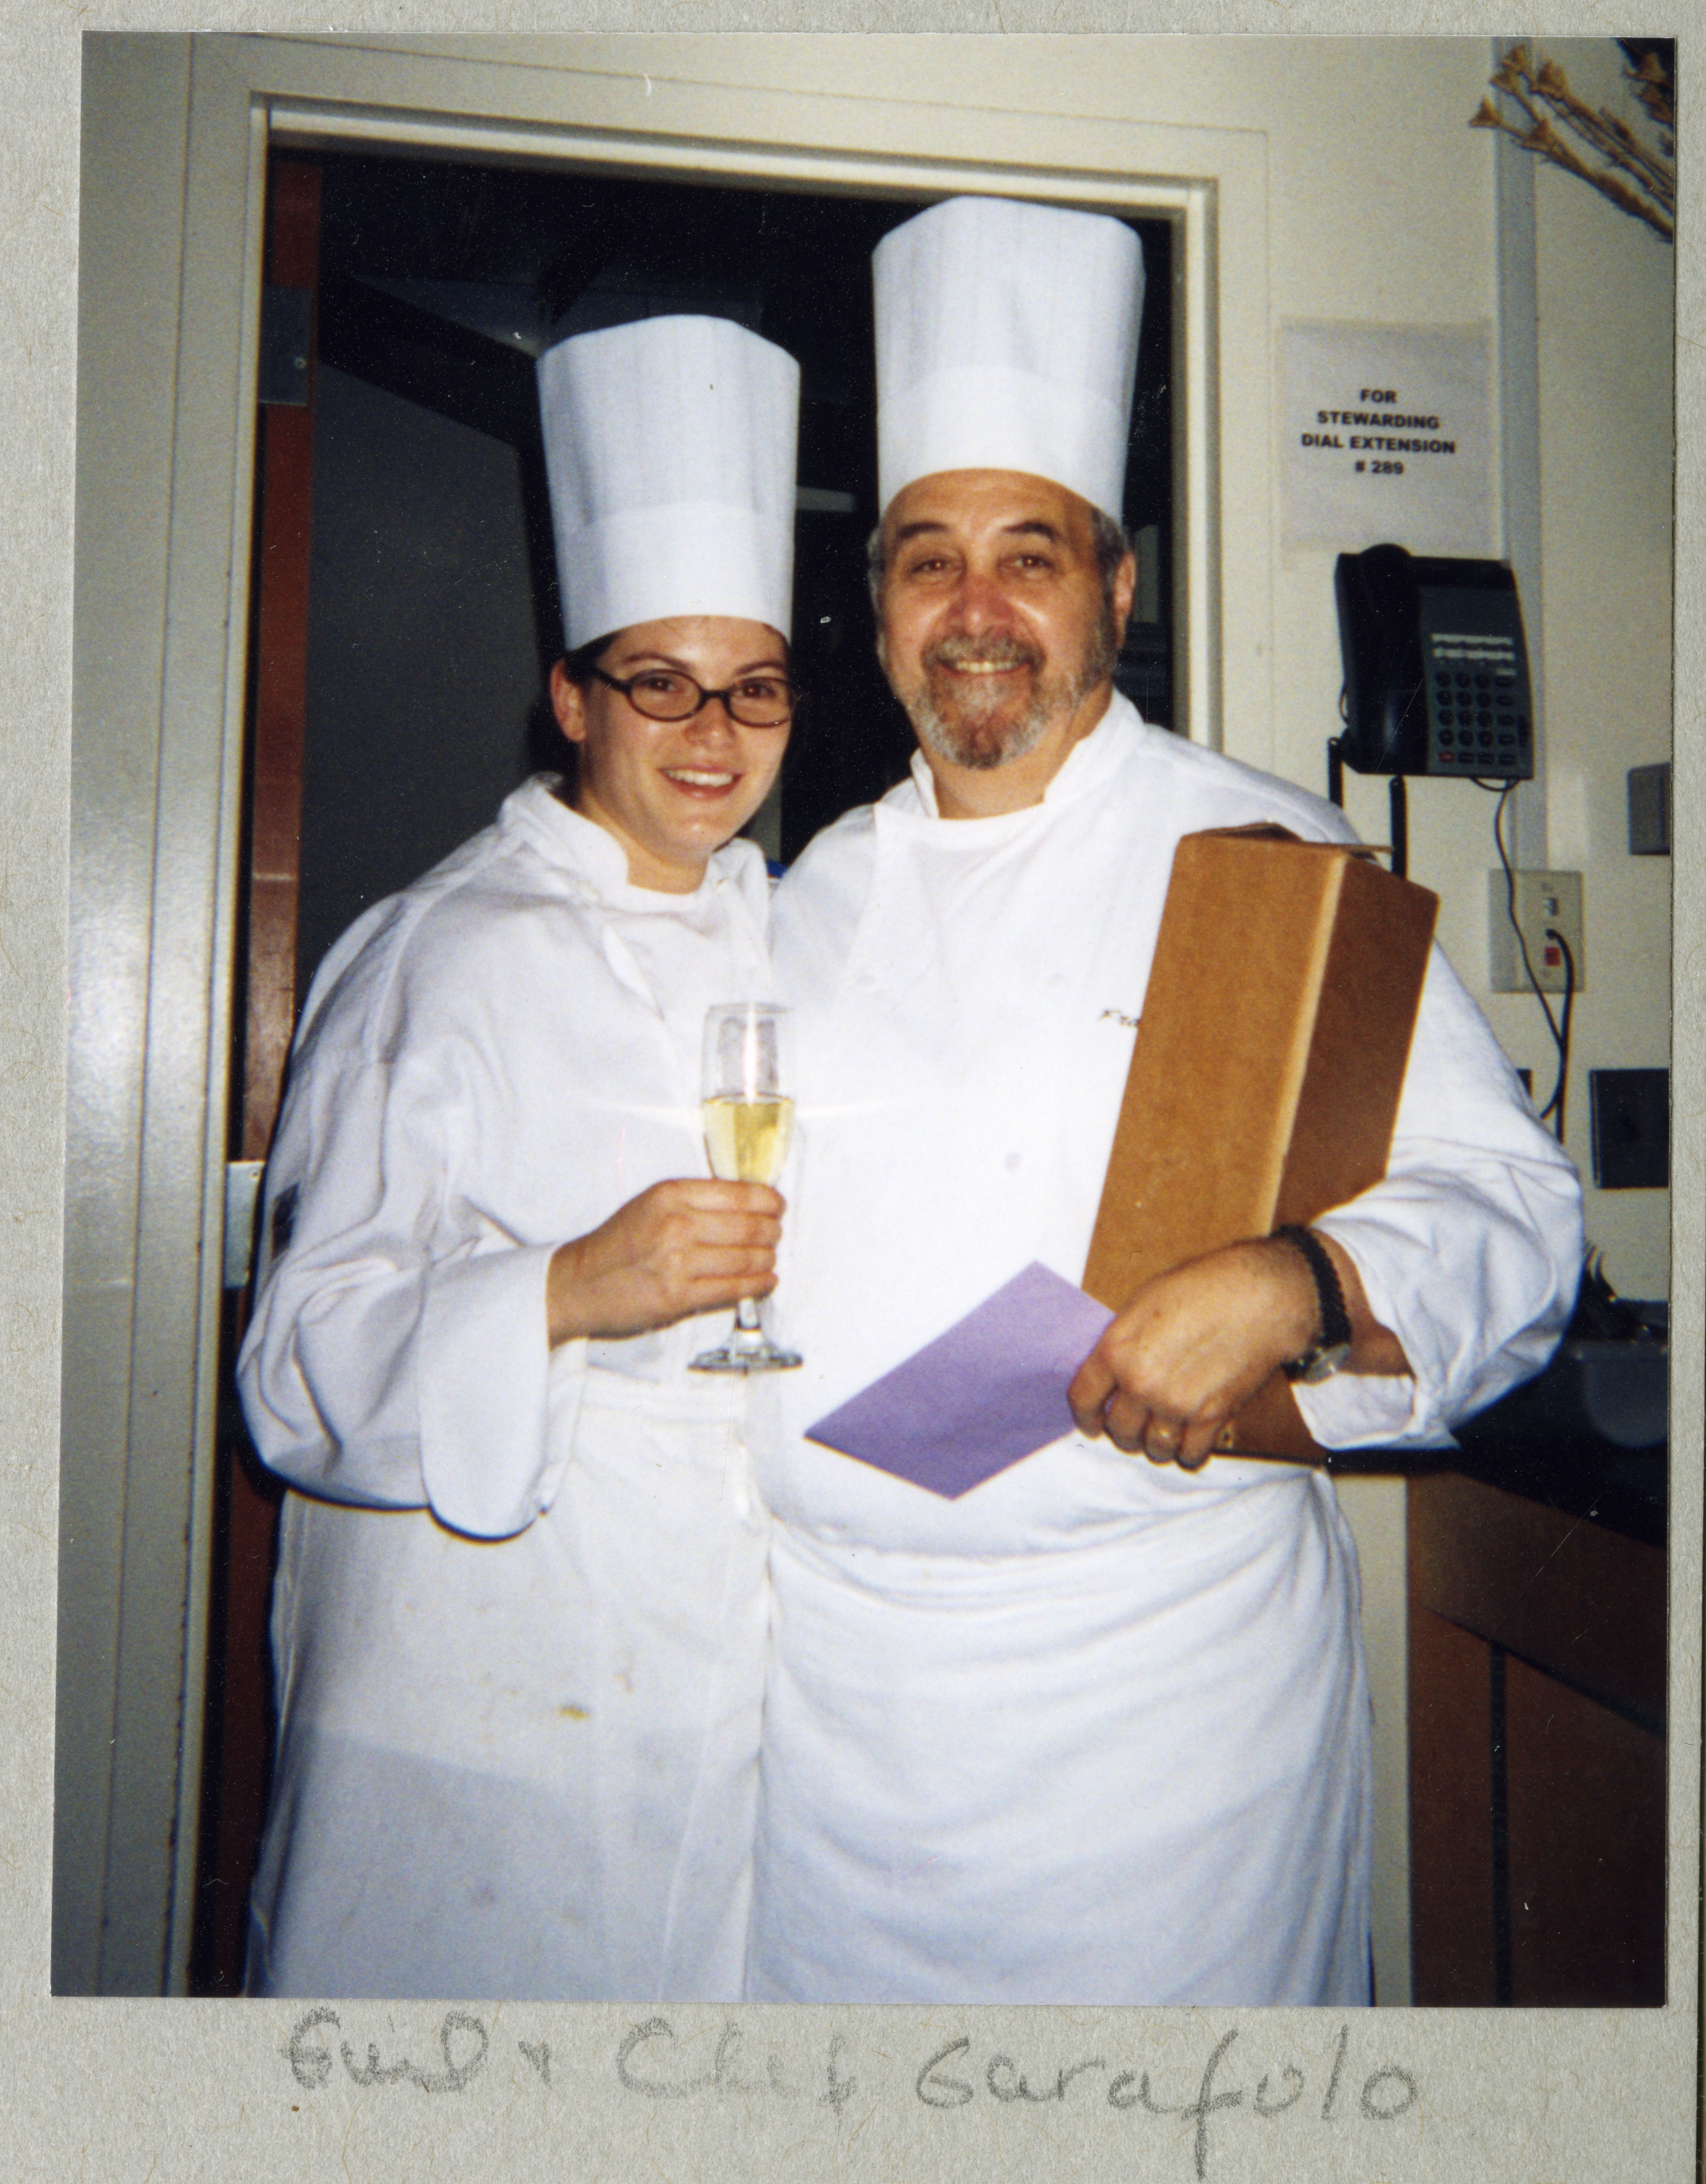 Gail Simmons with Chef Garofolo